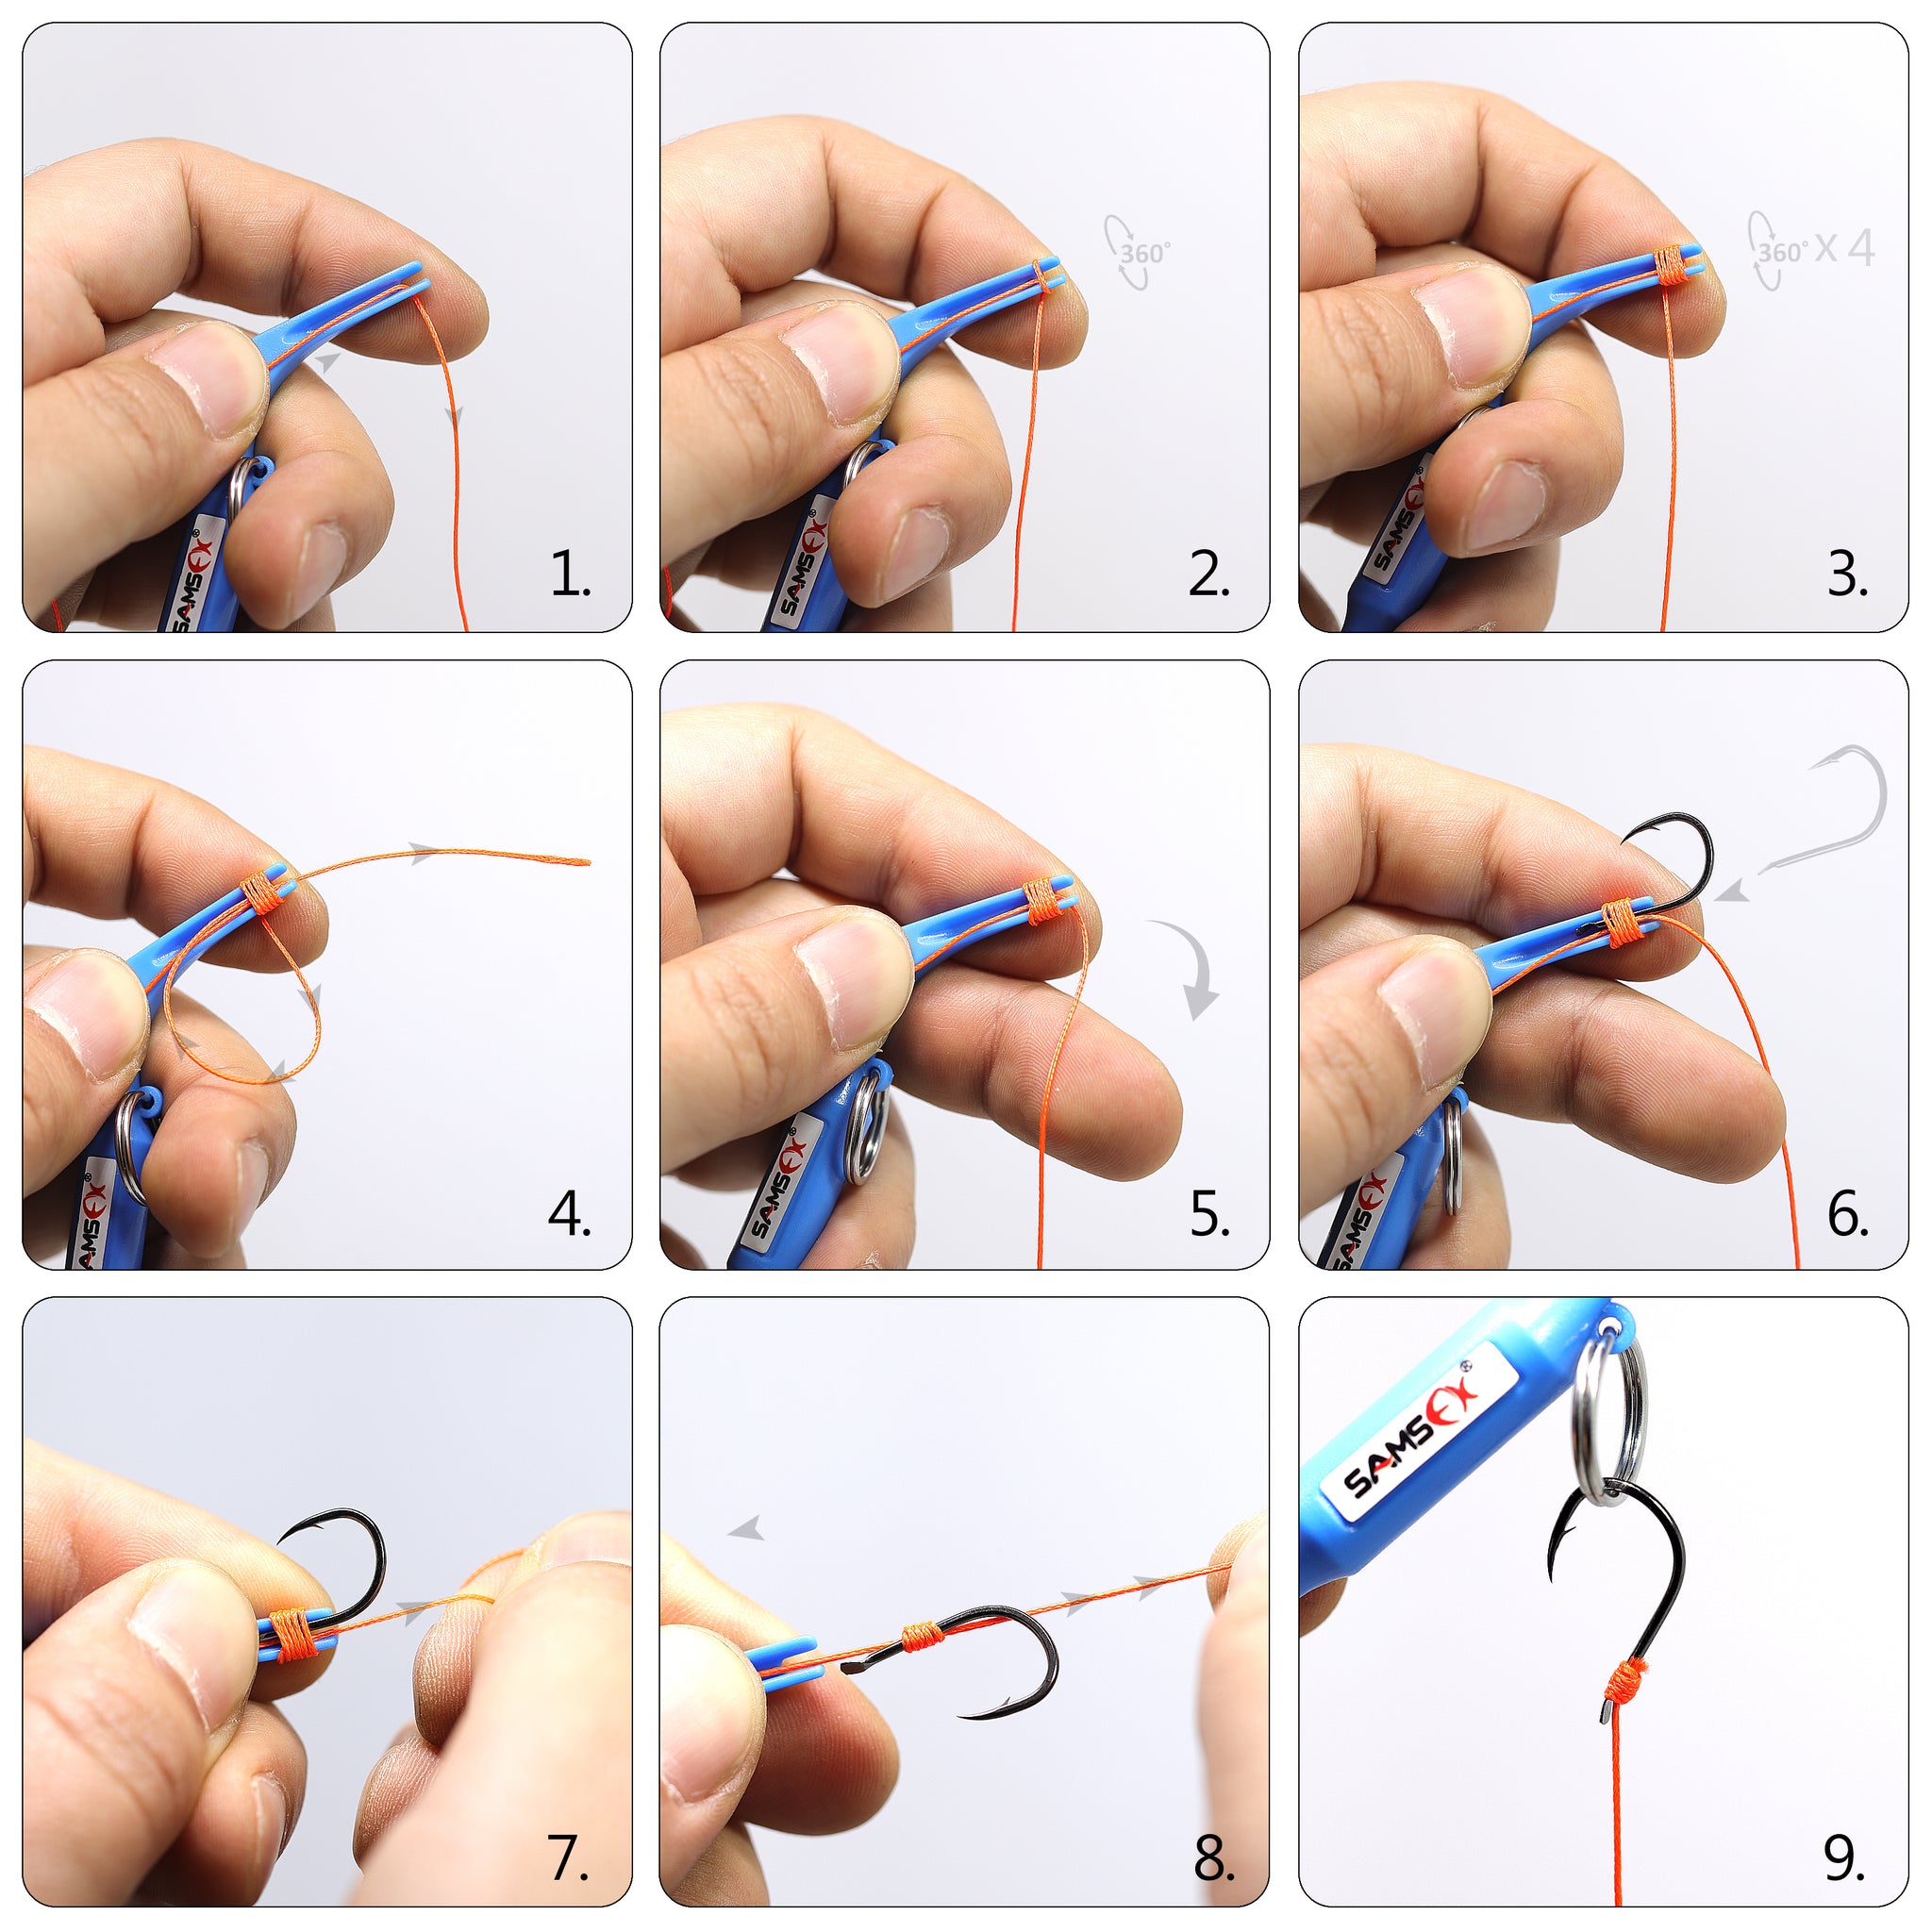 SAMSFX Fishing Quick Knot Tool Loop Tyer Hook Remover Tools Kit –  samsfxfishing